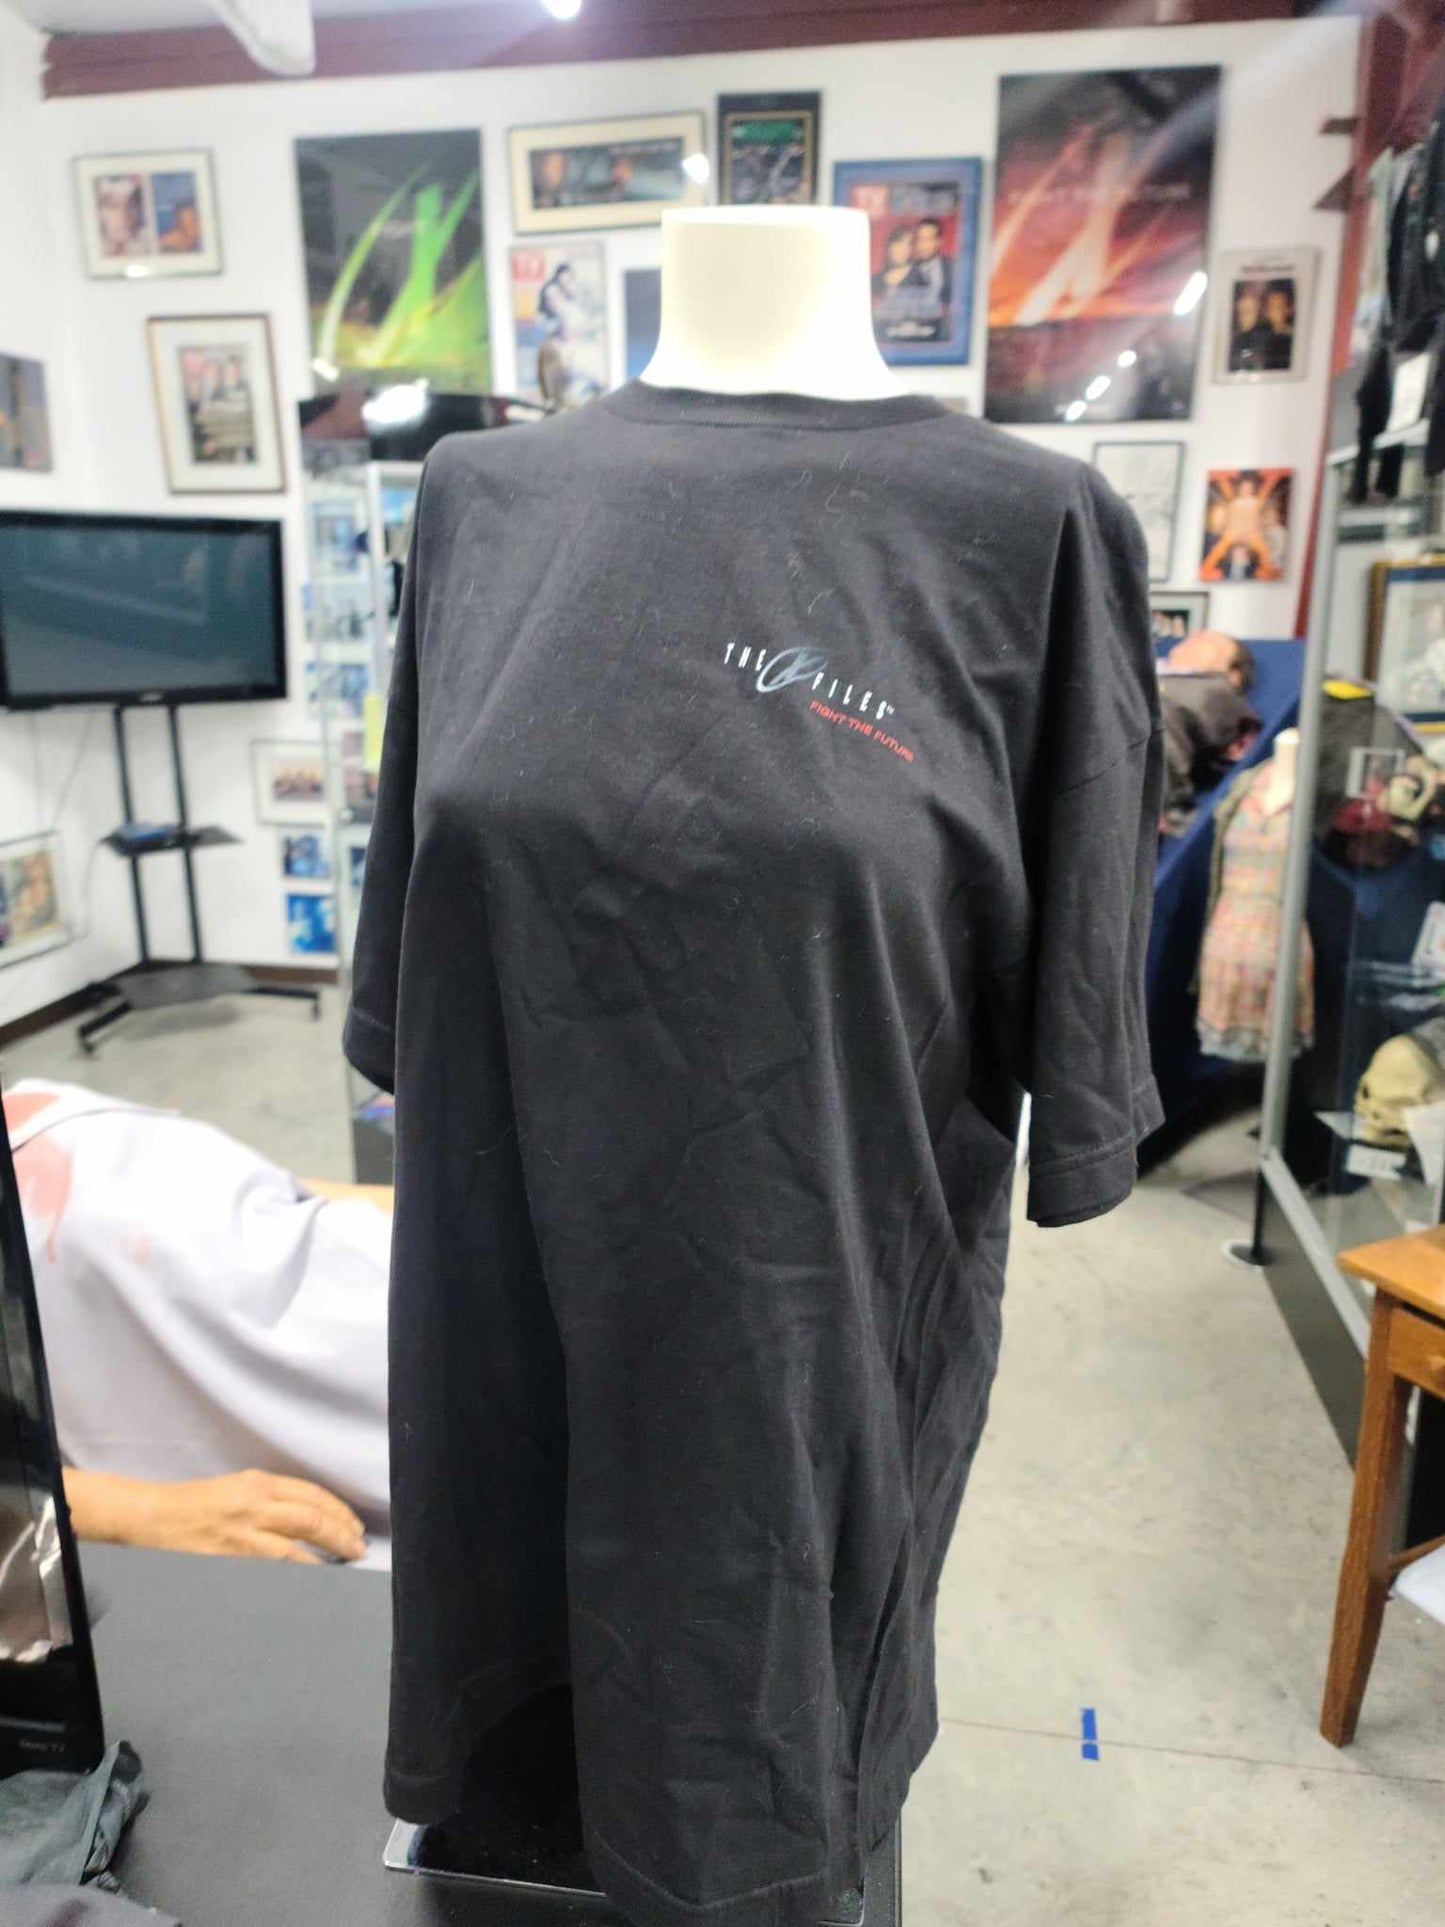 The X-Files FTF Shirt